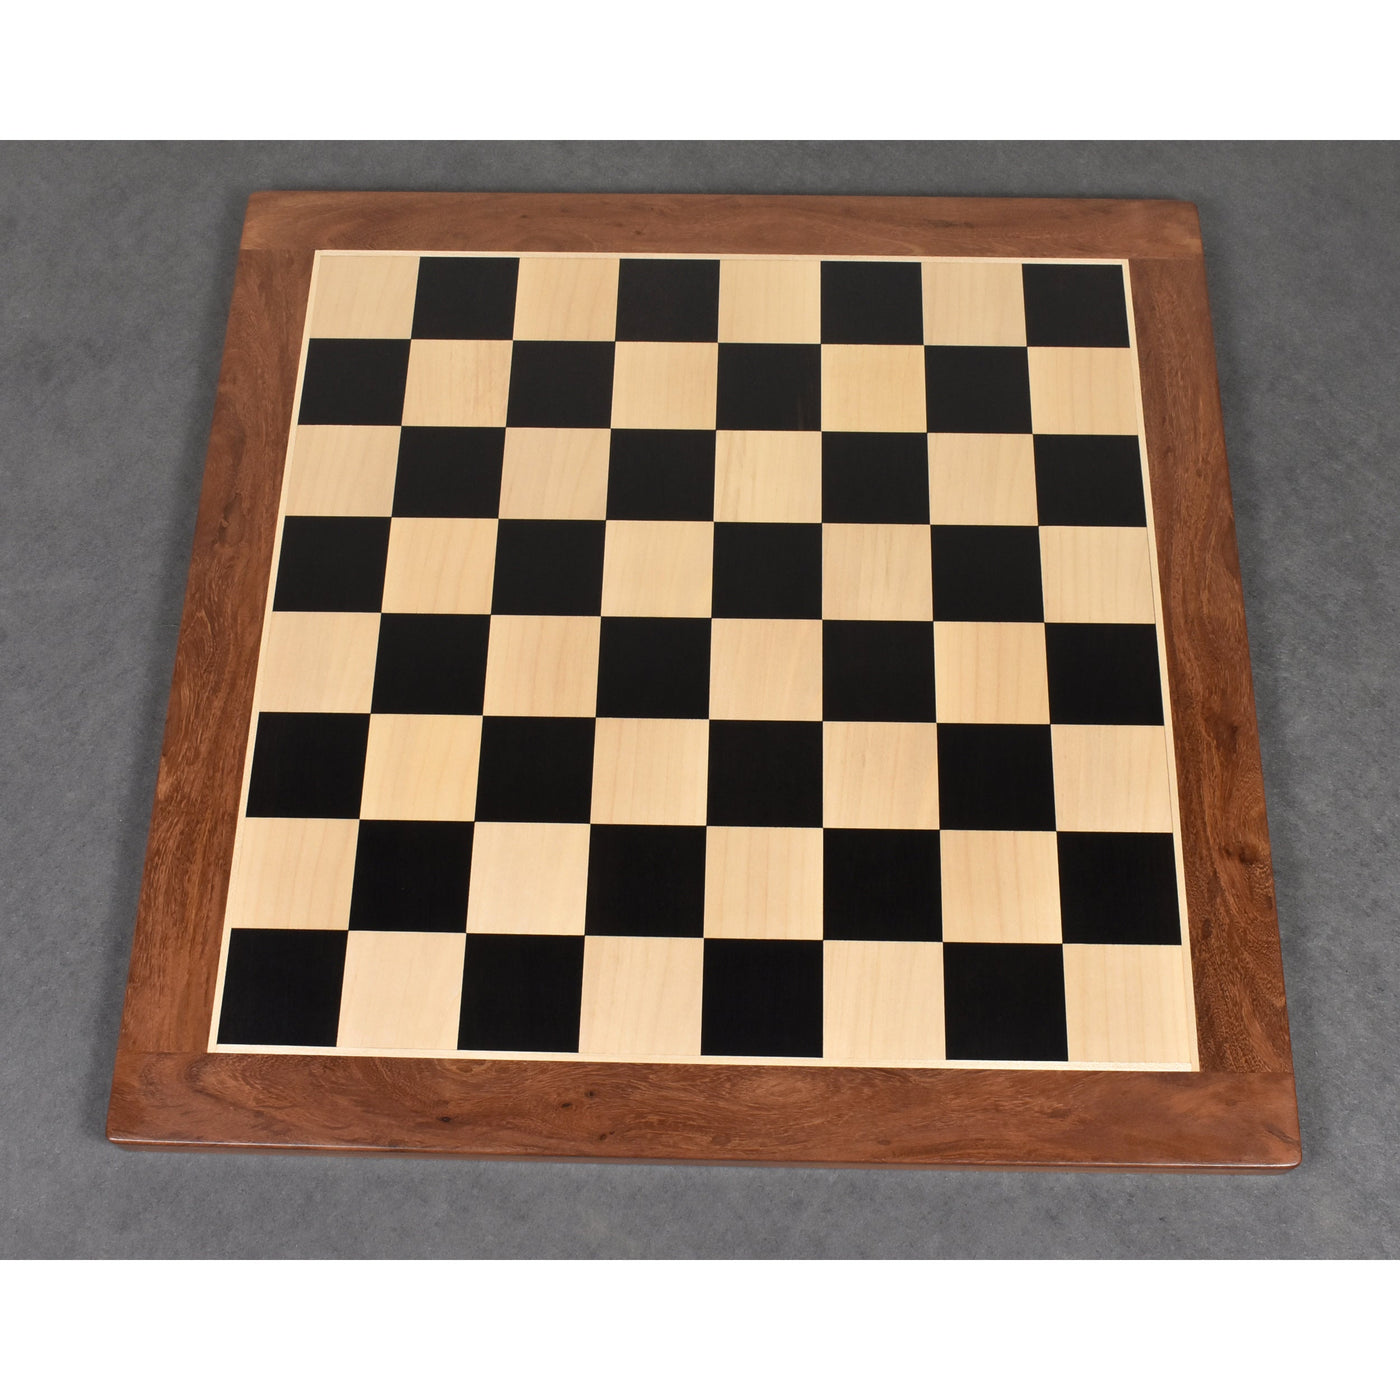 Combo of 4.1" Stallion Staunton Luxury Chess Set - Pieces in Ebony Wood with 23" Large Ebony & Maple Wood Chessboard and Storage Box